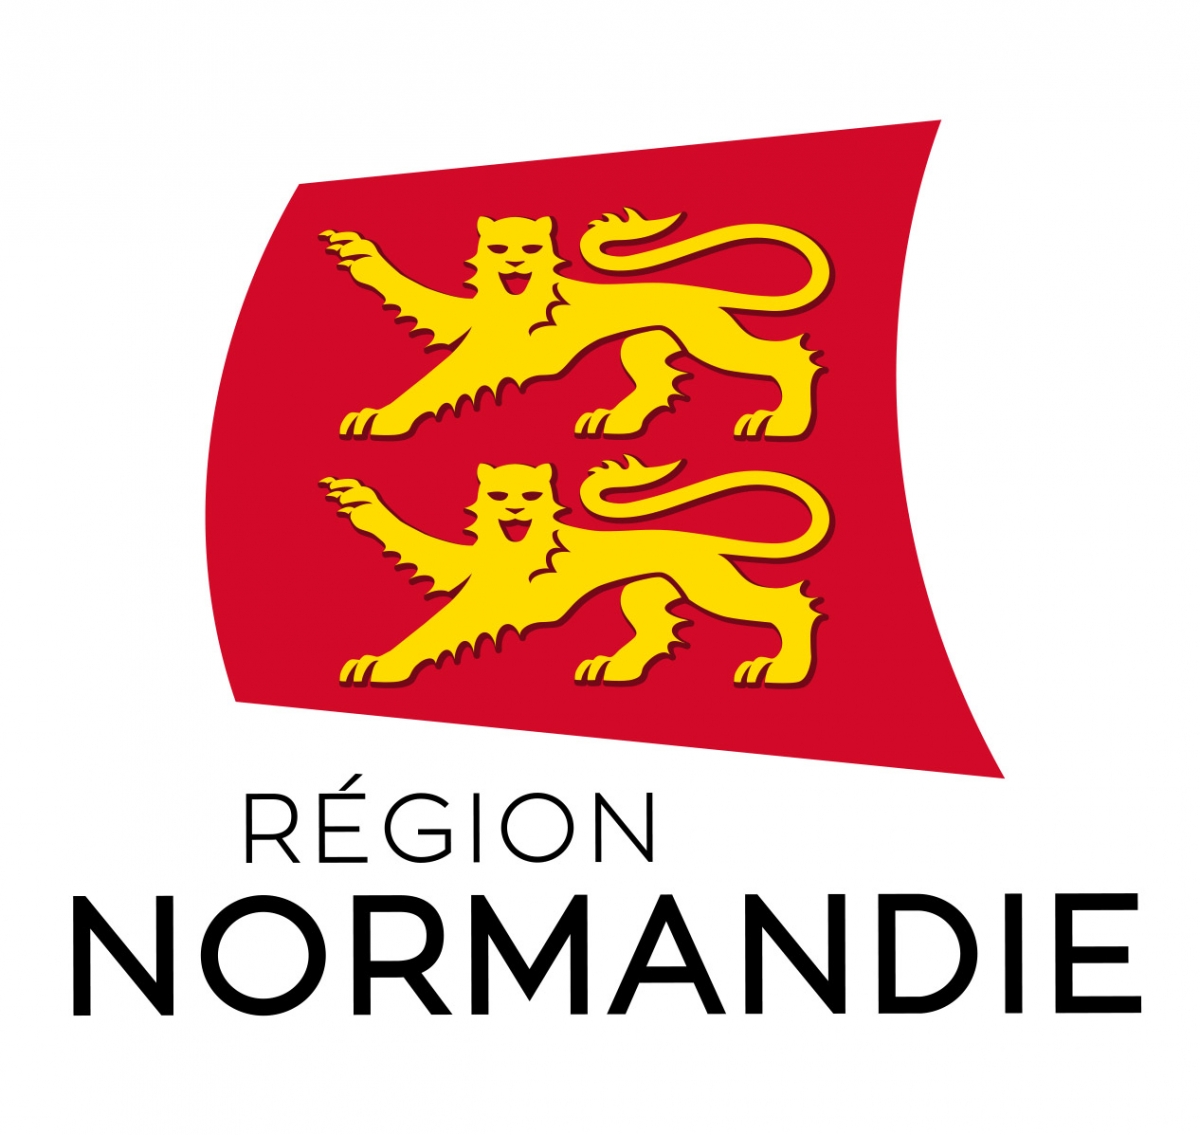 Normandy Region